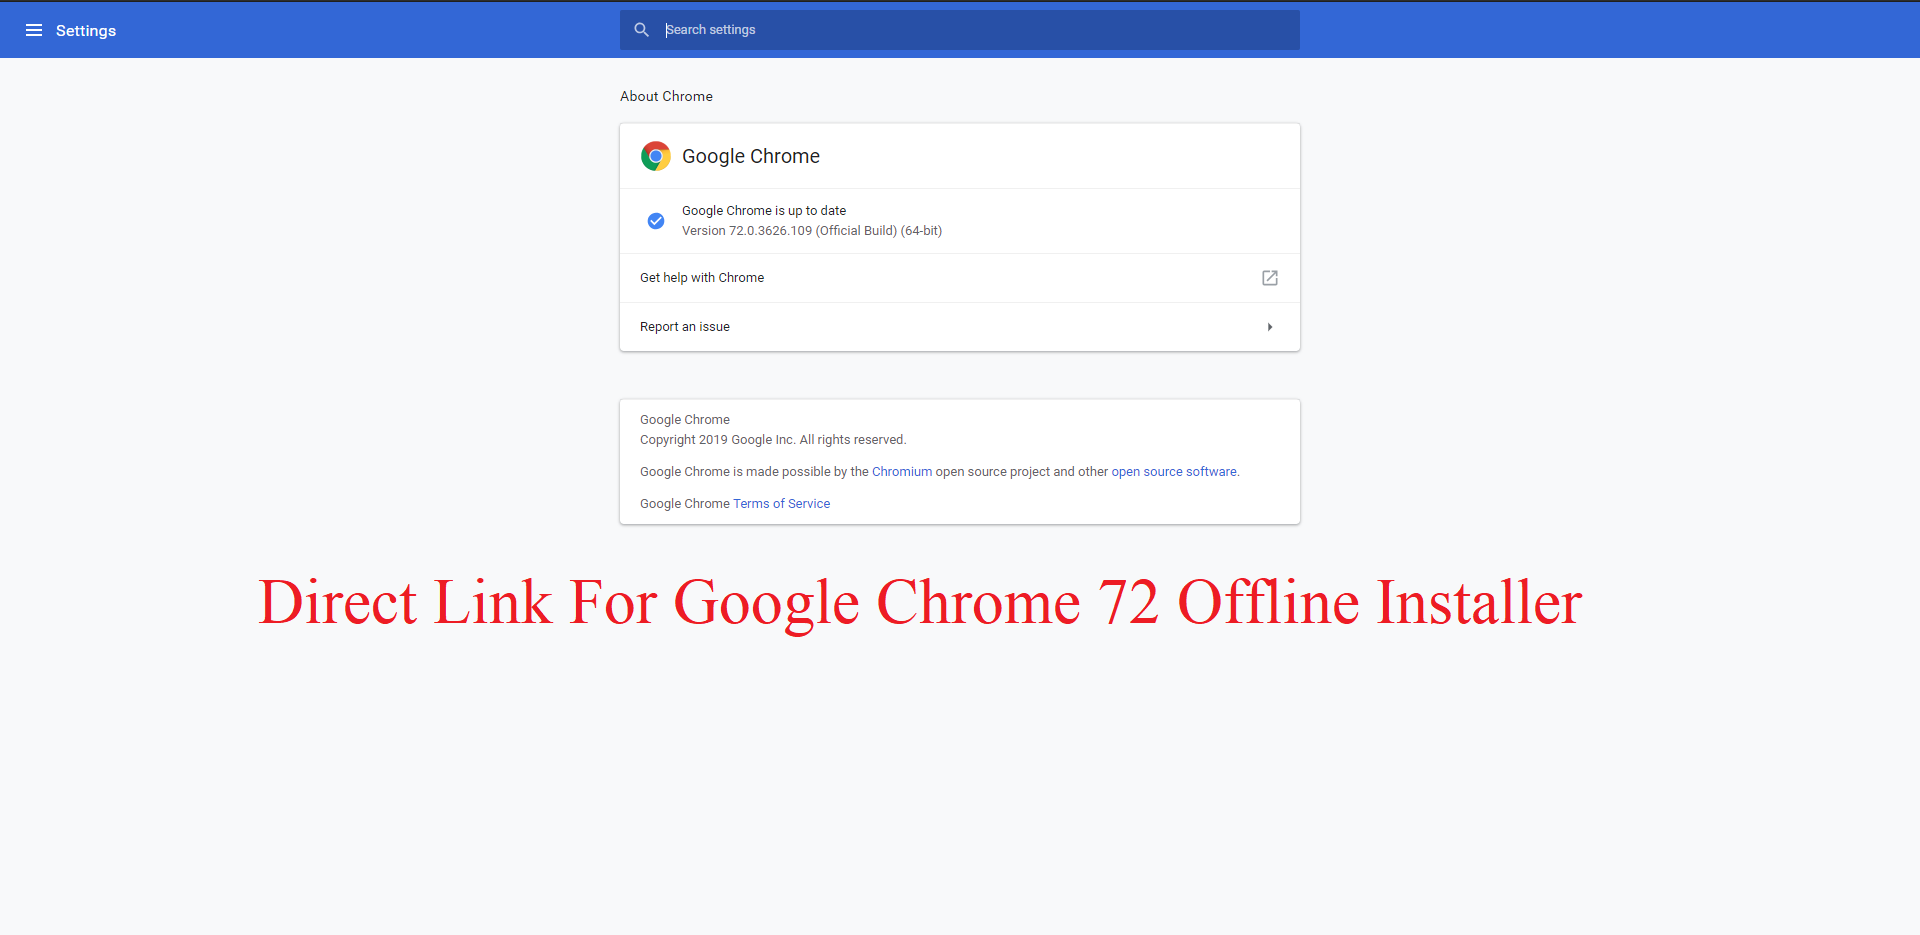 Direct Link For Google Chrome 72 Offline Installer